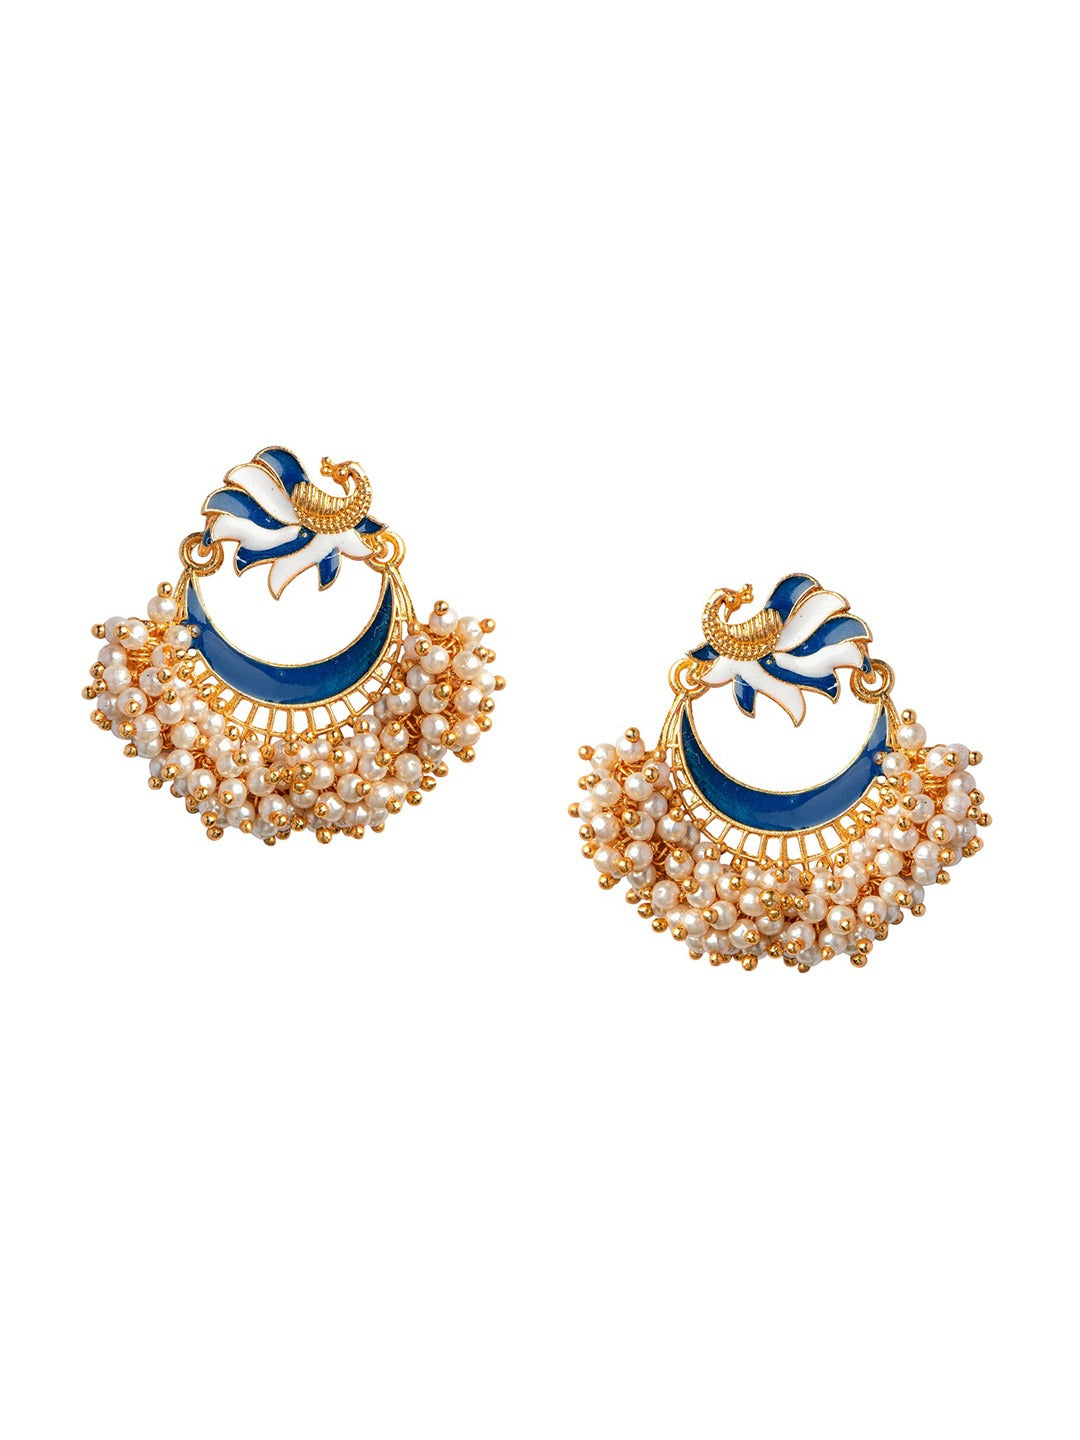 Women's Blue Gold-Toned Pearl Beaded Enamelled Peacock Shaped Chandbali Earring - Morkanth